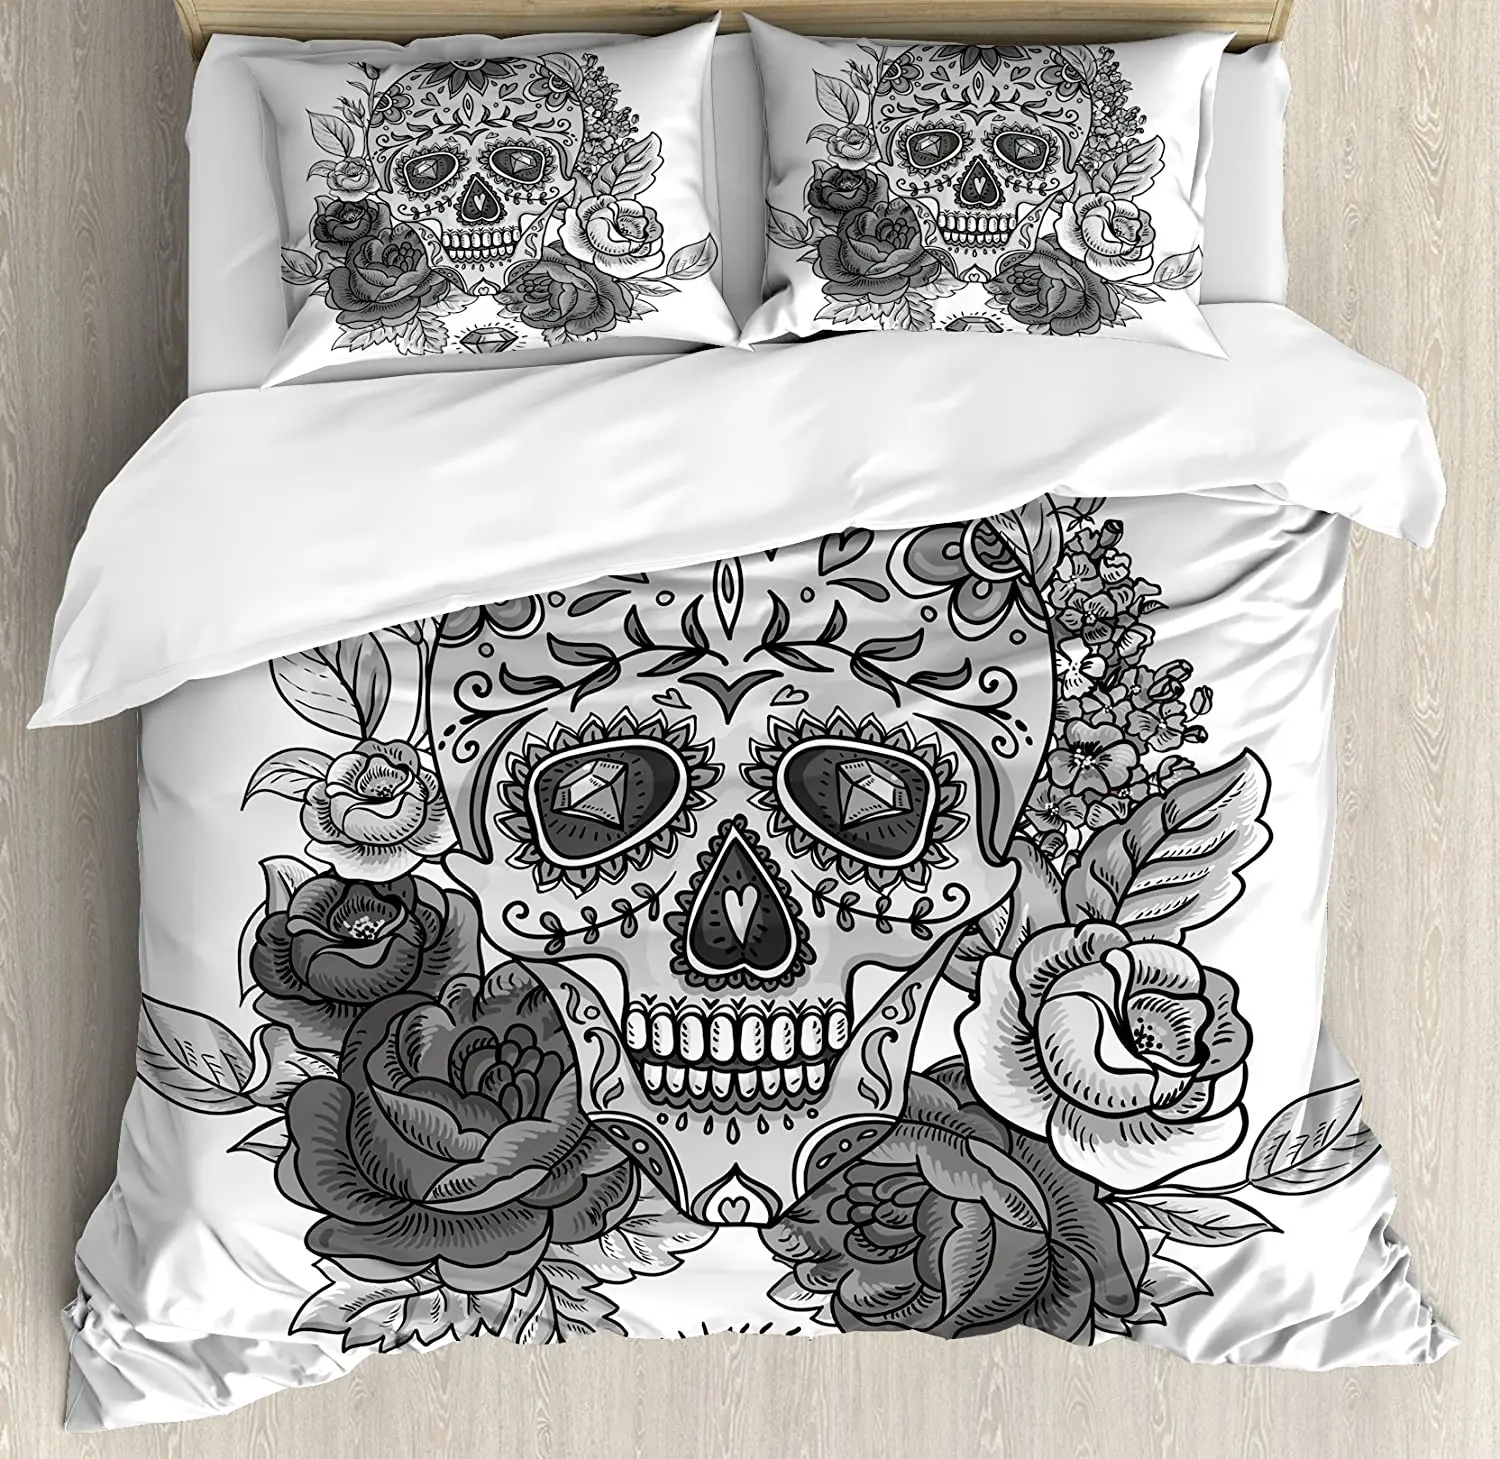 

Sugar Skull Bedding Set For Bedroom Bed Home Monochrome Skull with Roses Leaves and Diamon Duvet Cover Quilt Cover Pillowcase